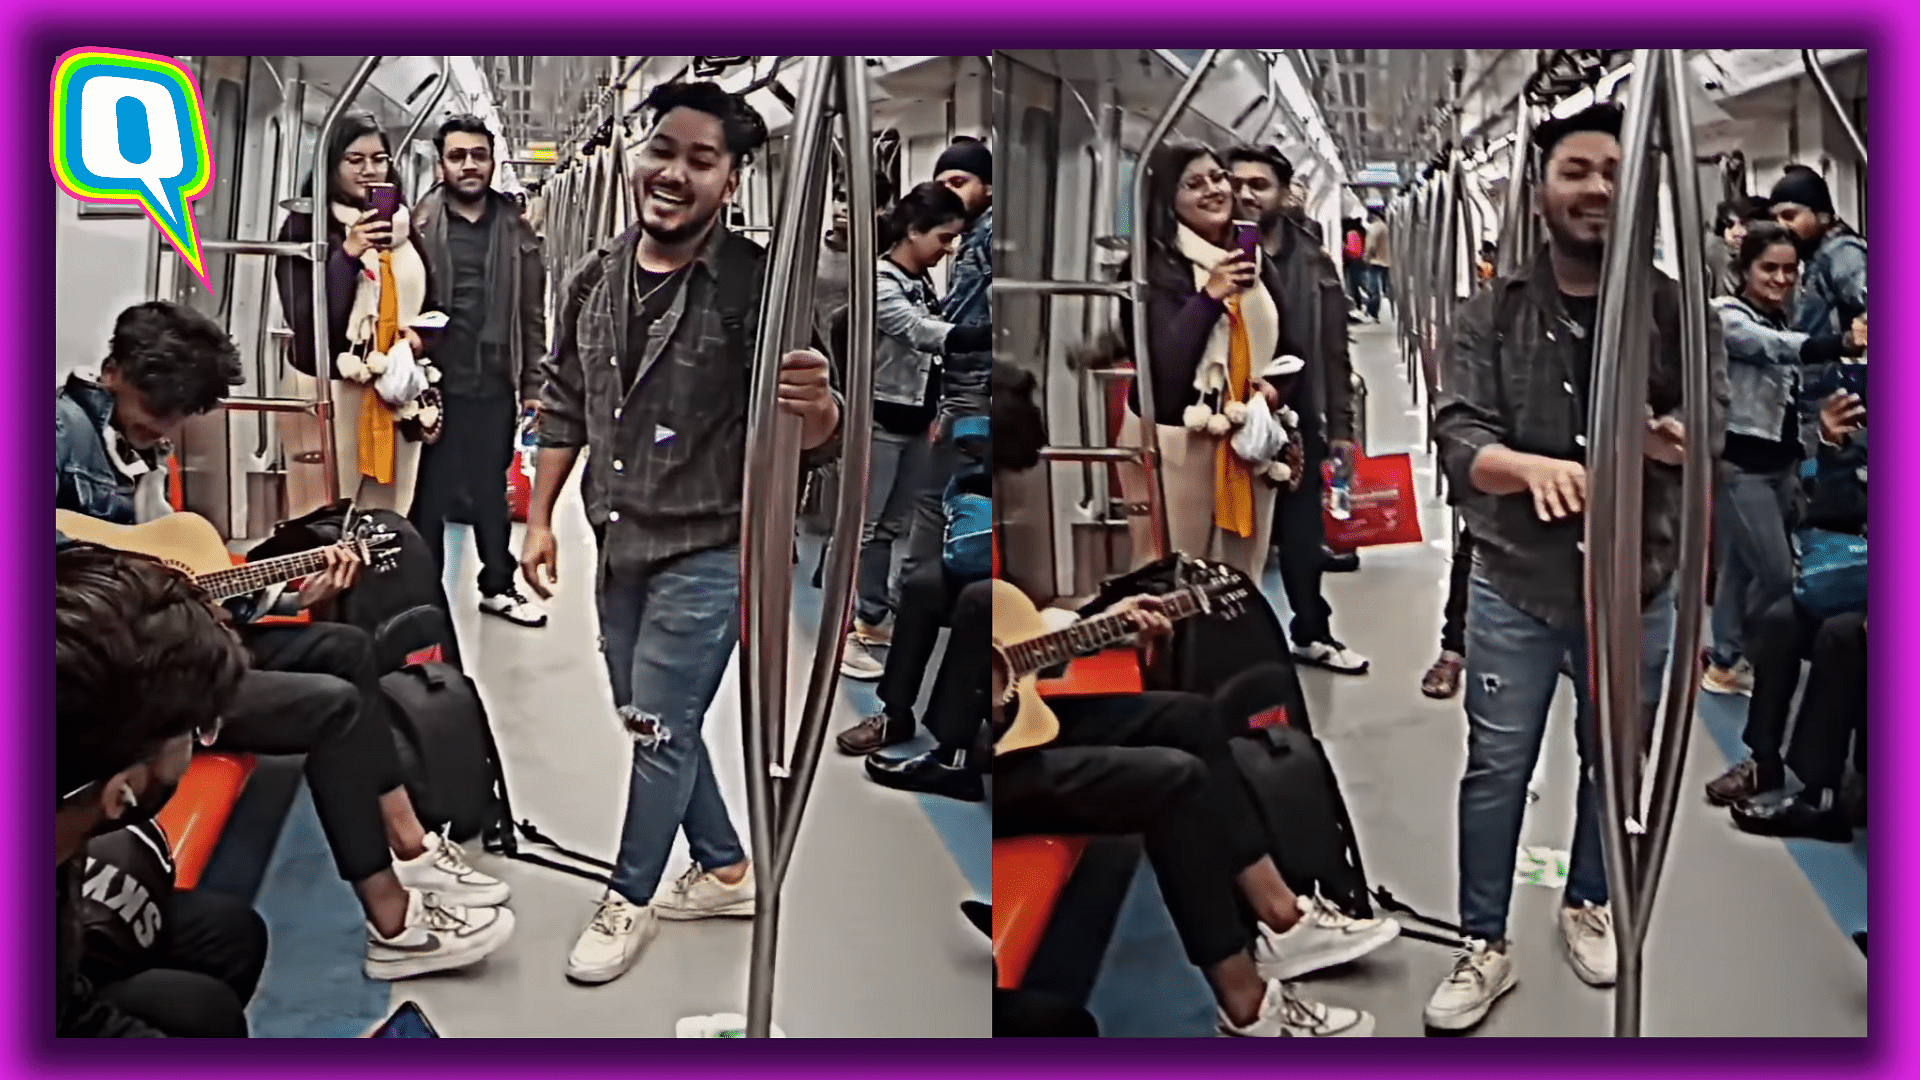 <div class="paragraphs"><p>Singer and guitarist perform 'Bakhuda tumhi ho' in Delhi metro, video goes viral</p></div>